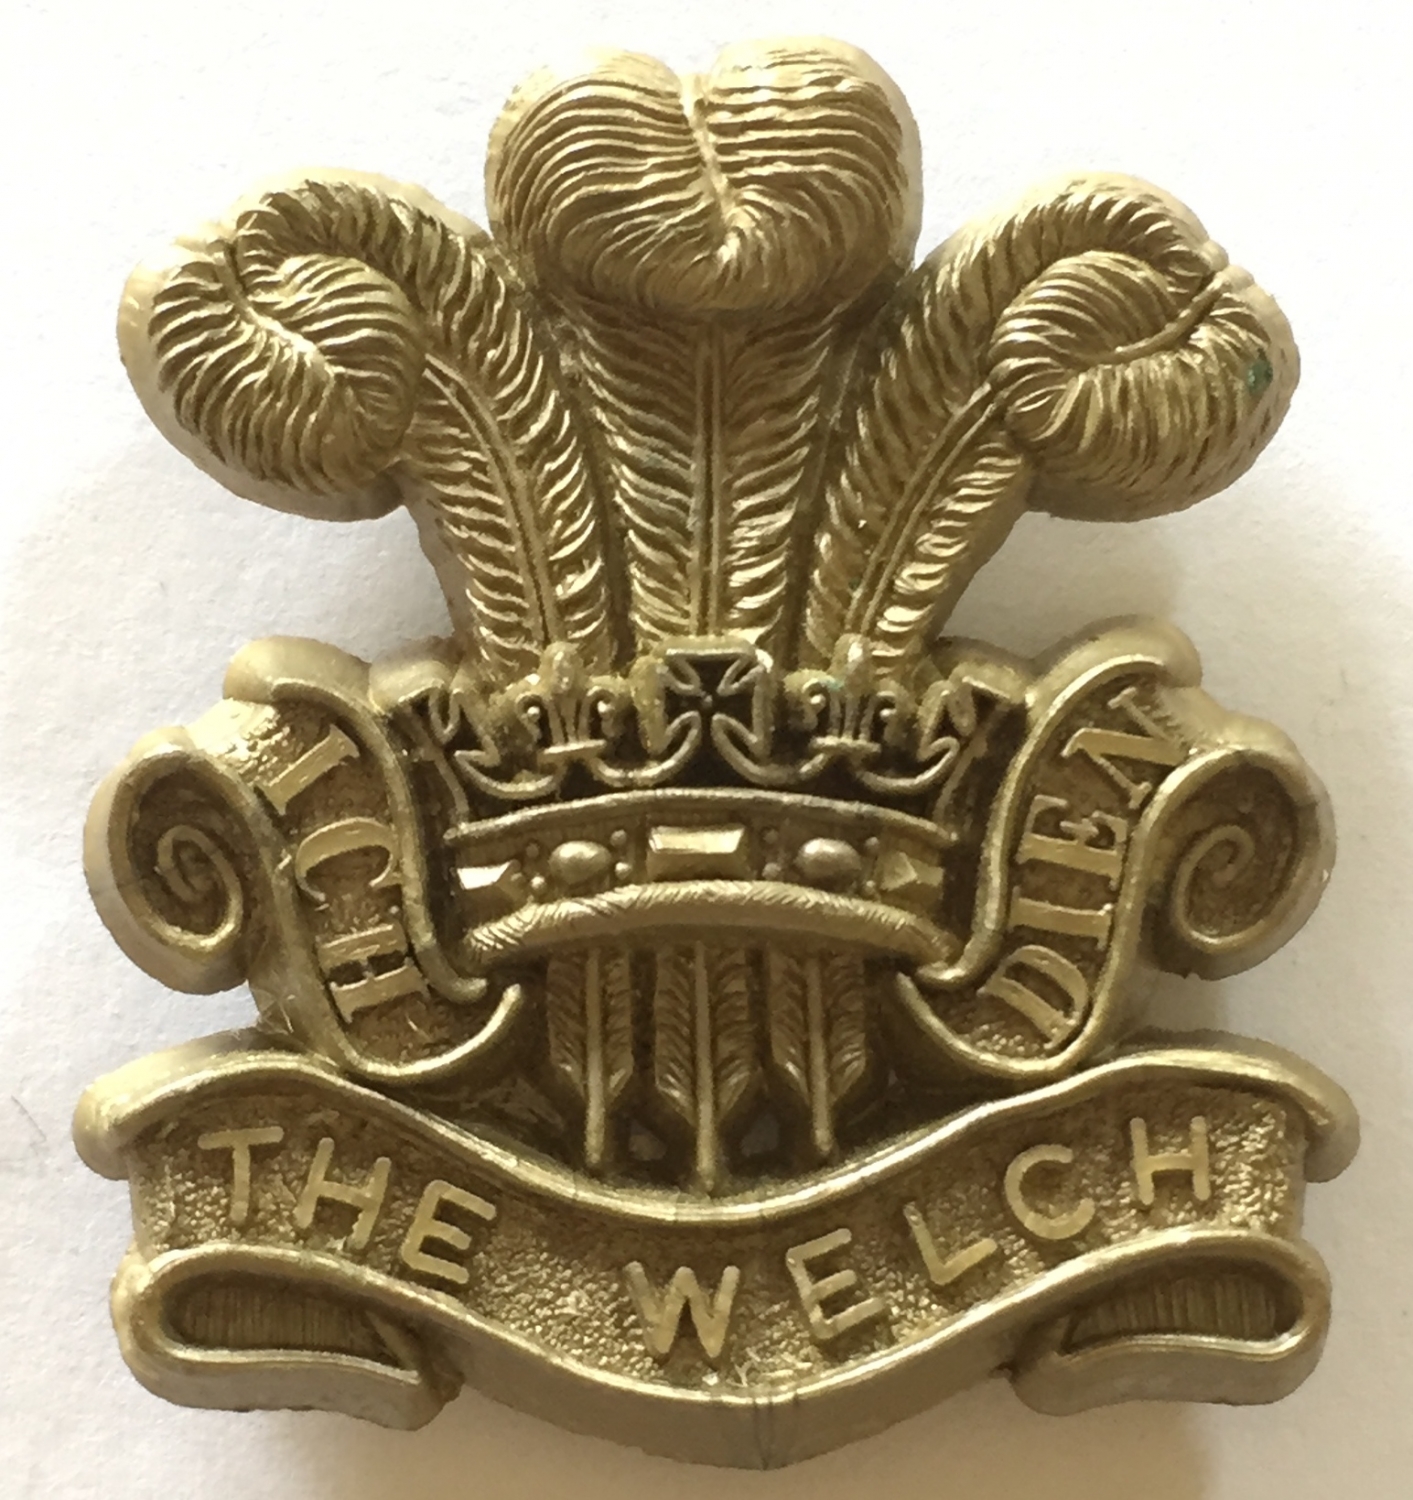 Welch Regiment WW2 plastic badge by Stanley